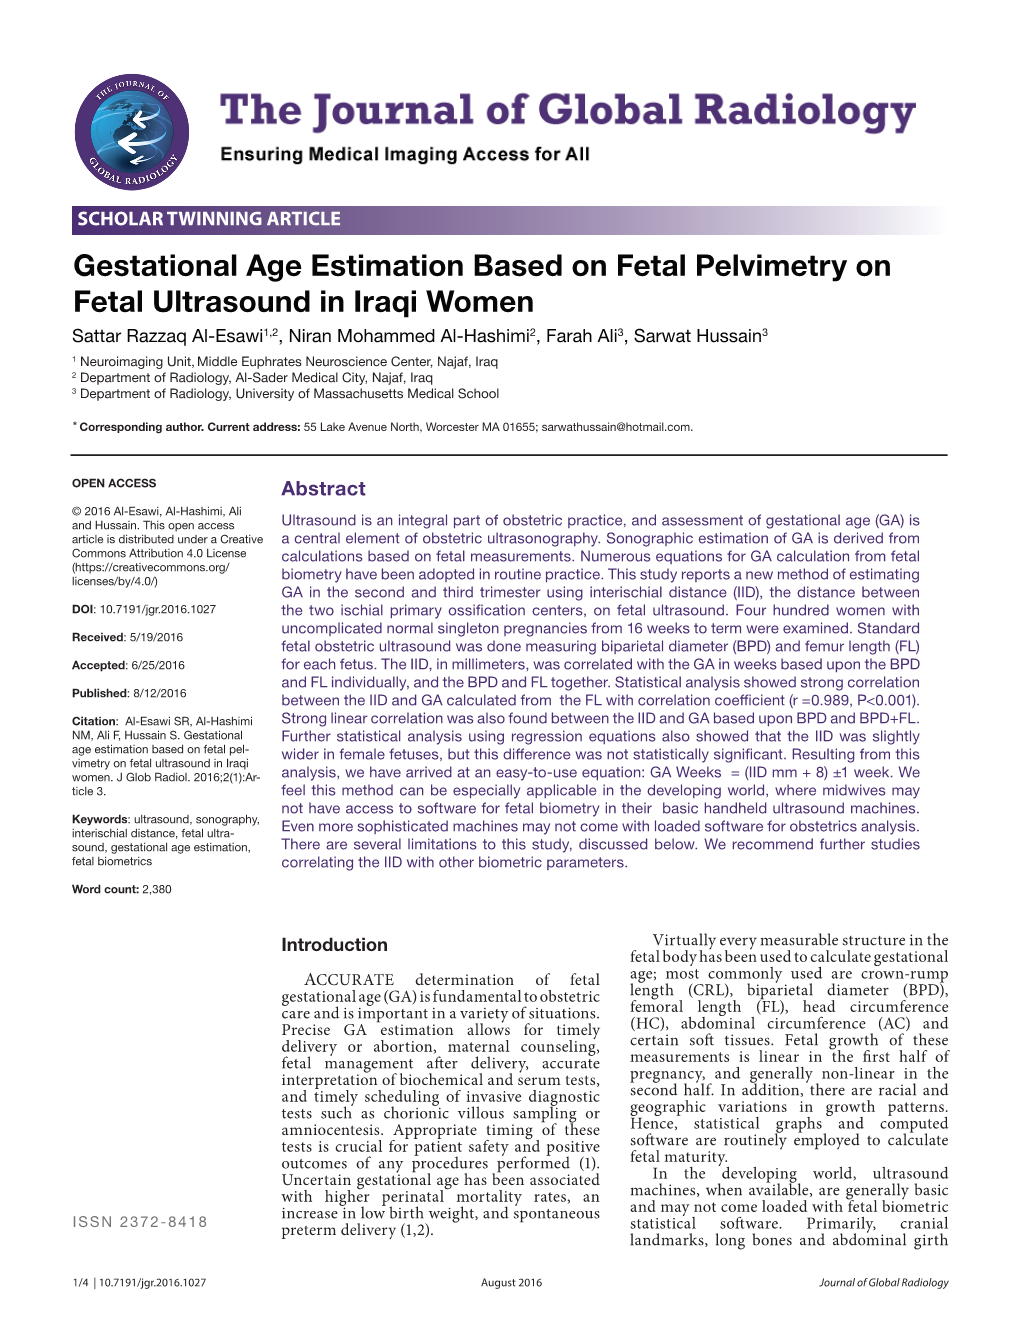 Gestational Age Estimation Based on Fetal Pelvimetry on Fetal Ultrasound